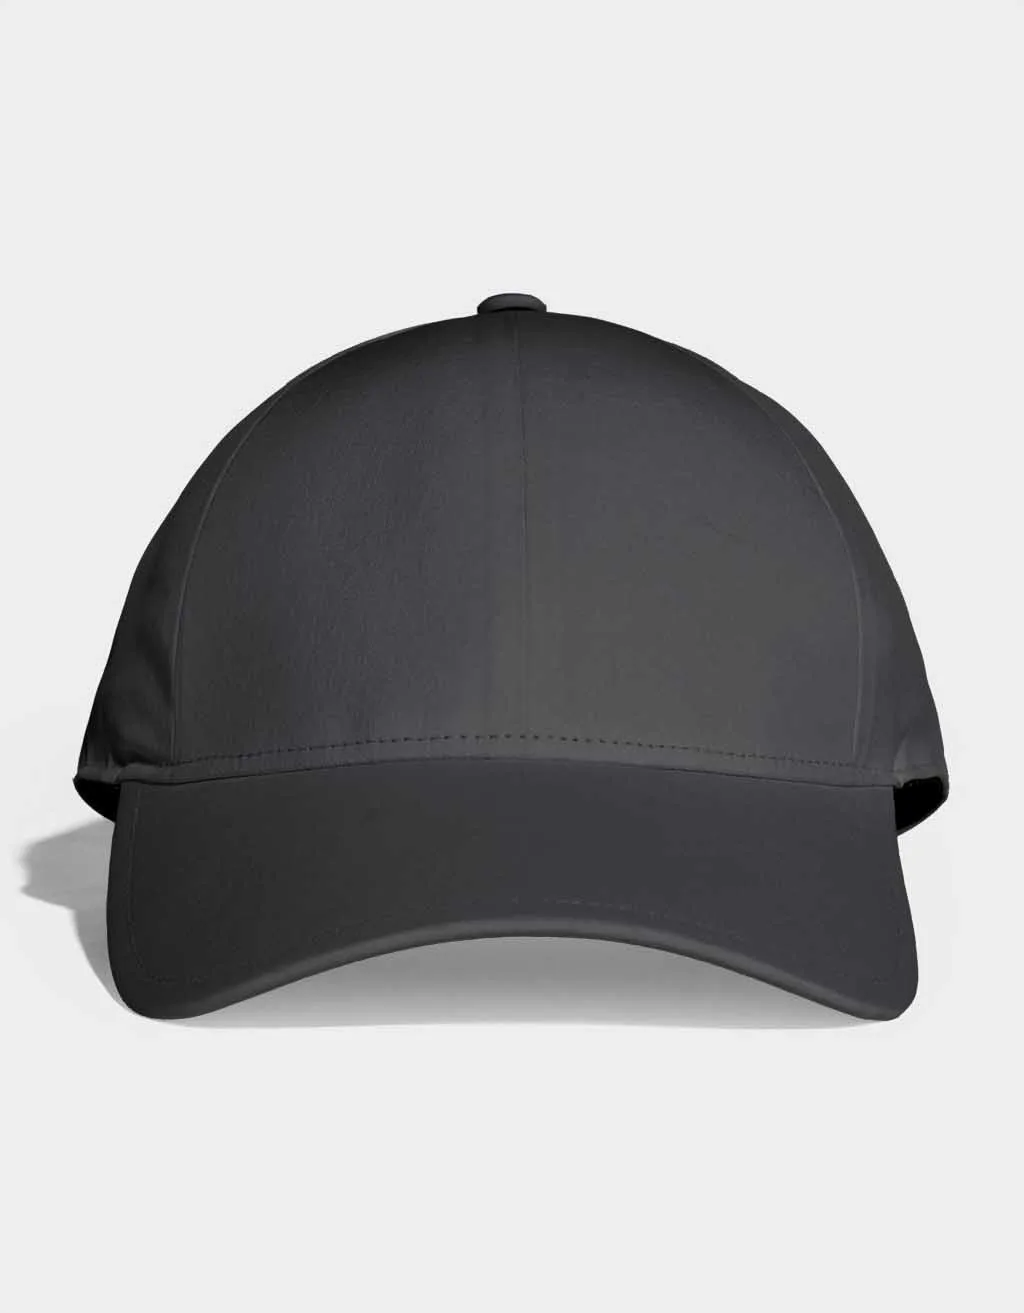 Buy Plain black cap for men and women online india under 200